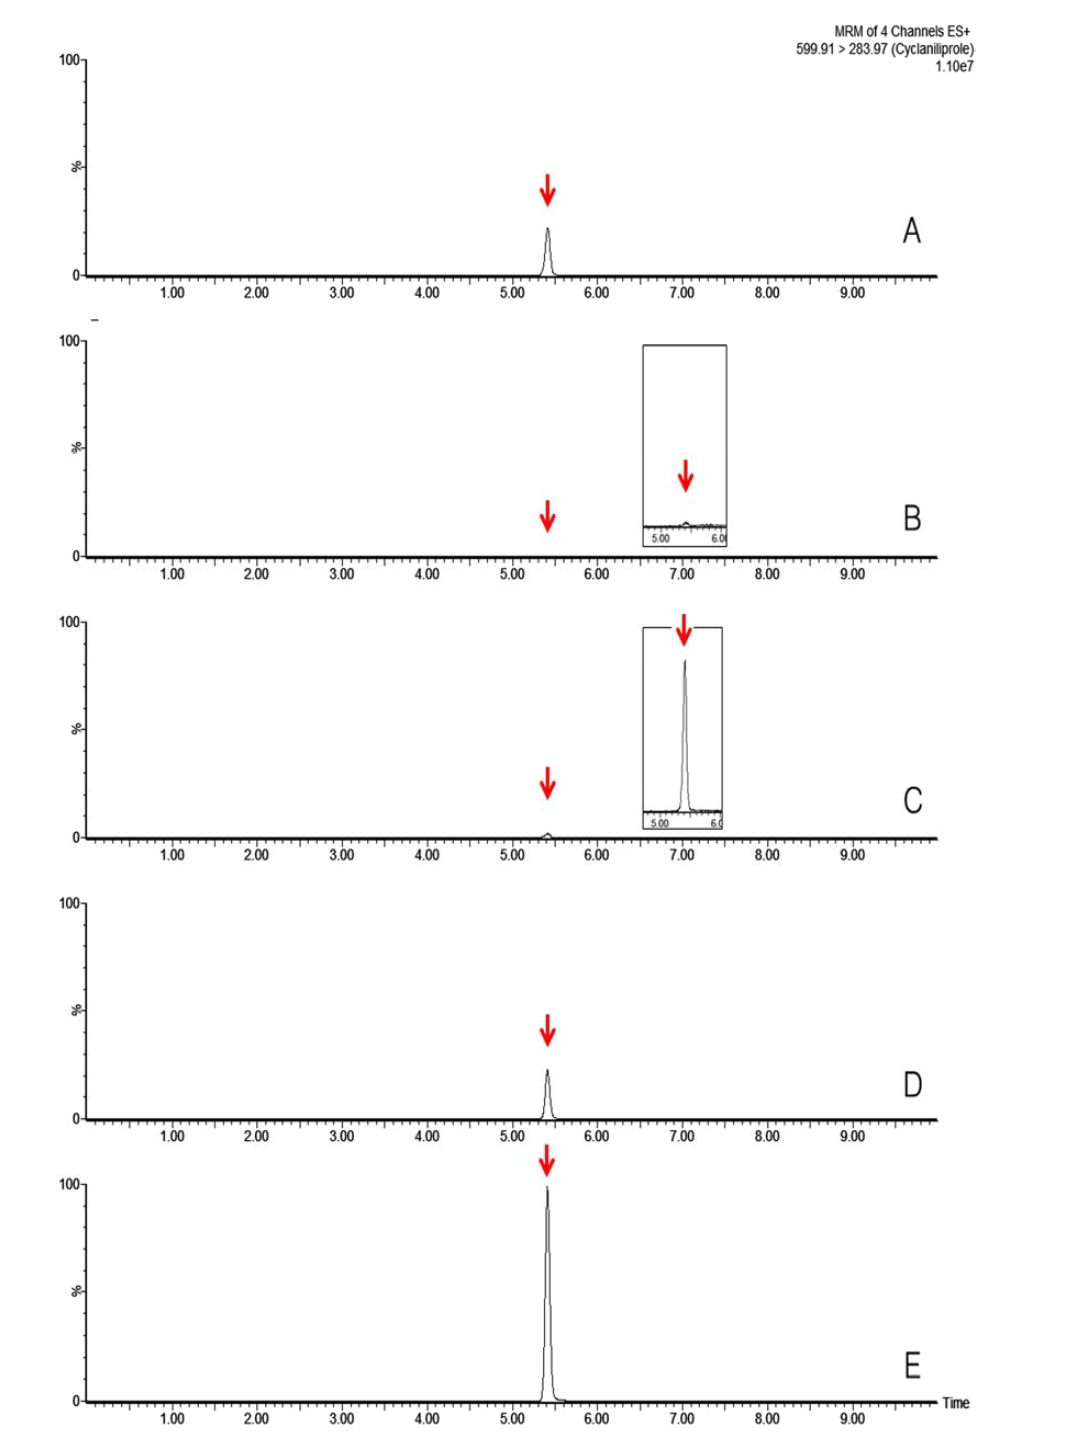 Representative MRM(quantification ion) chromatograms of cyclaniliprole corresponding to: (A) standard solution at 0.05 mg/kg, (B) mandarin control, (C) spiked at 0.005 mg/kg, (D) spiked at 0.05 mg/kg and (E) spiked at 0.25 mg/kg